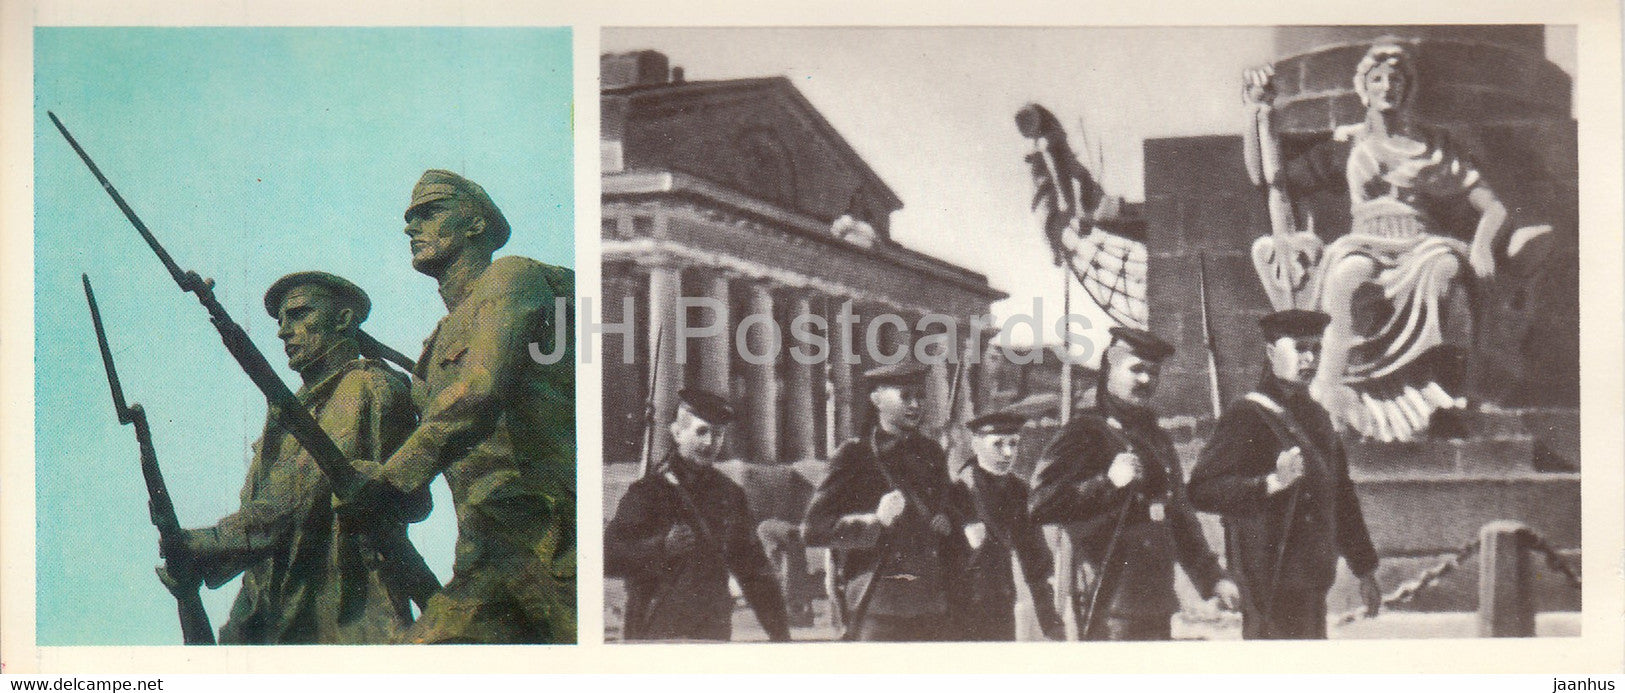 Monument to the Heroic Defenders of Leningrad - Pilot and sailors - patrol - memorial - 1976 - Russia USSR - unused - JH Postcards